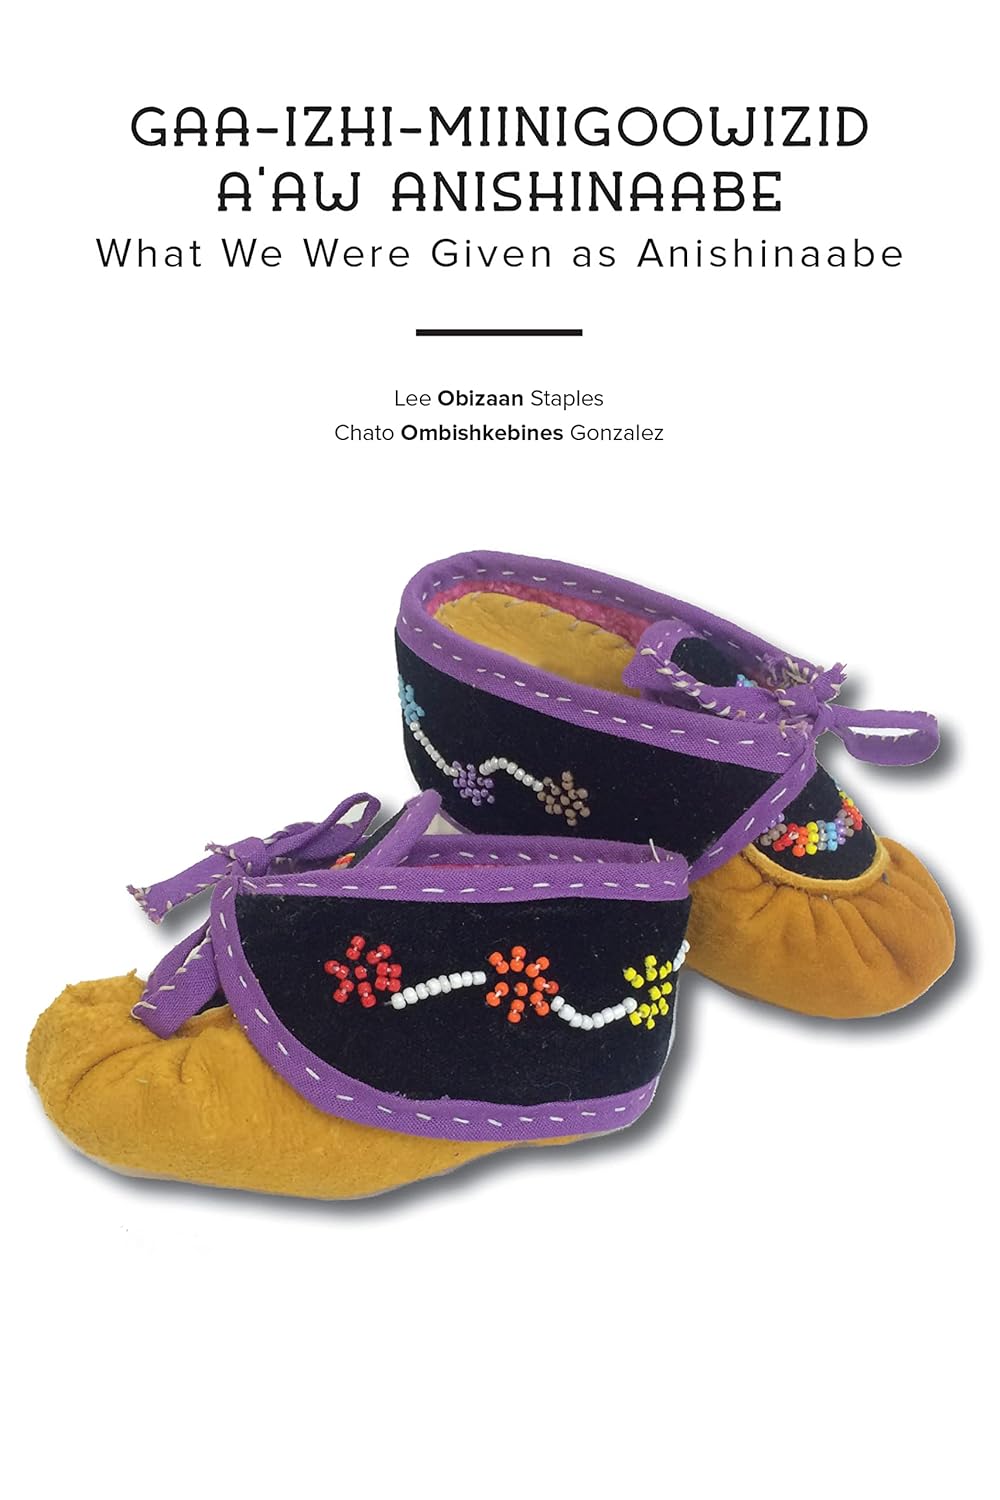 Gaa-izhi-miinigoowizid a’aw Anishinaabe: What We Were Given as Anishinaabe by Lee Obizaan Staples & Chato Ombishkebines Gonzales